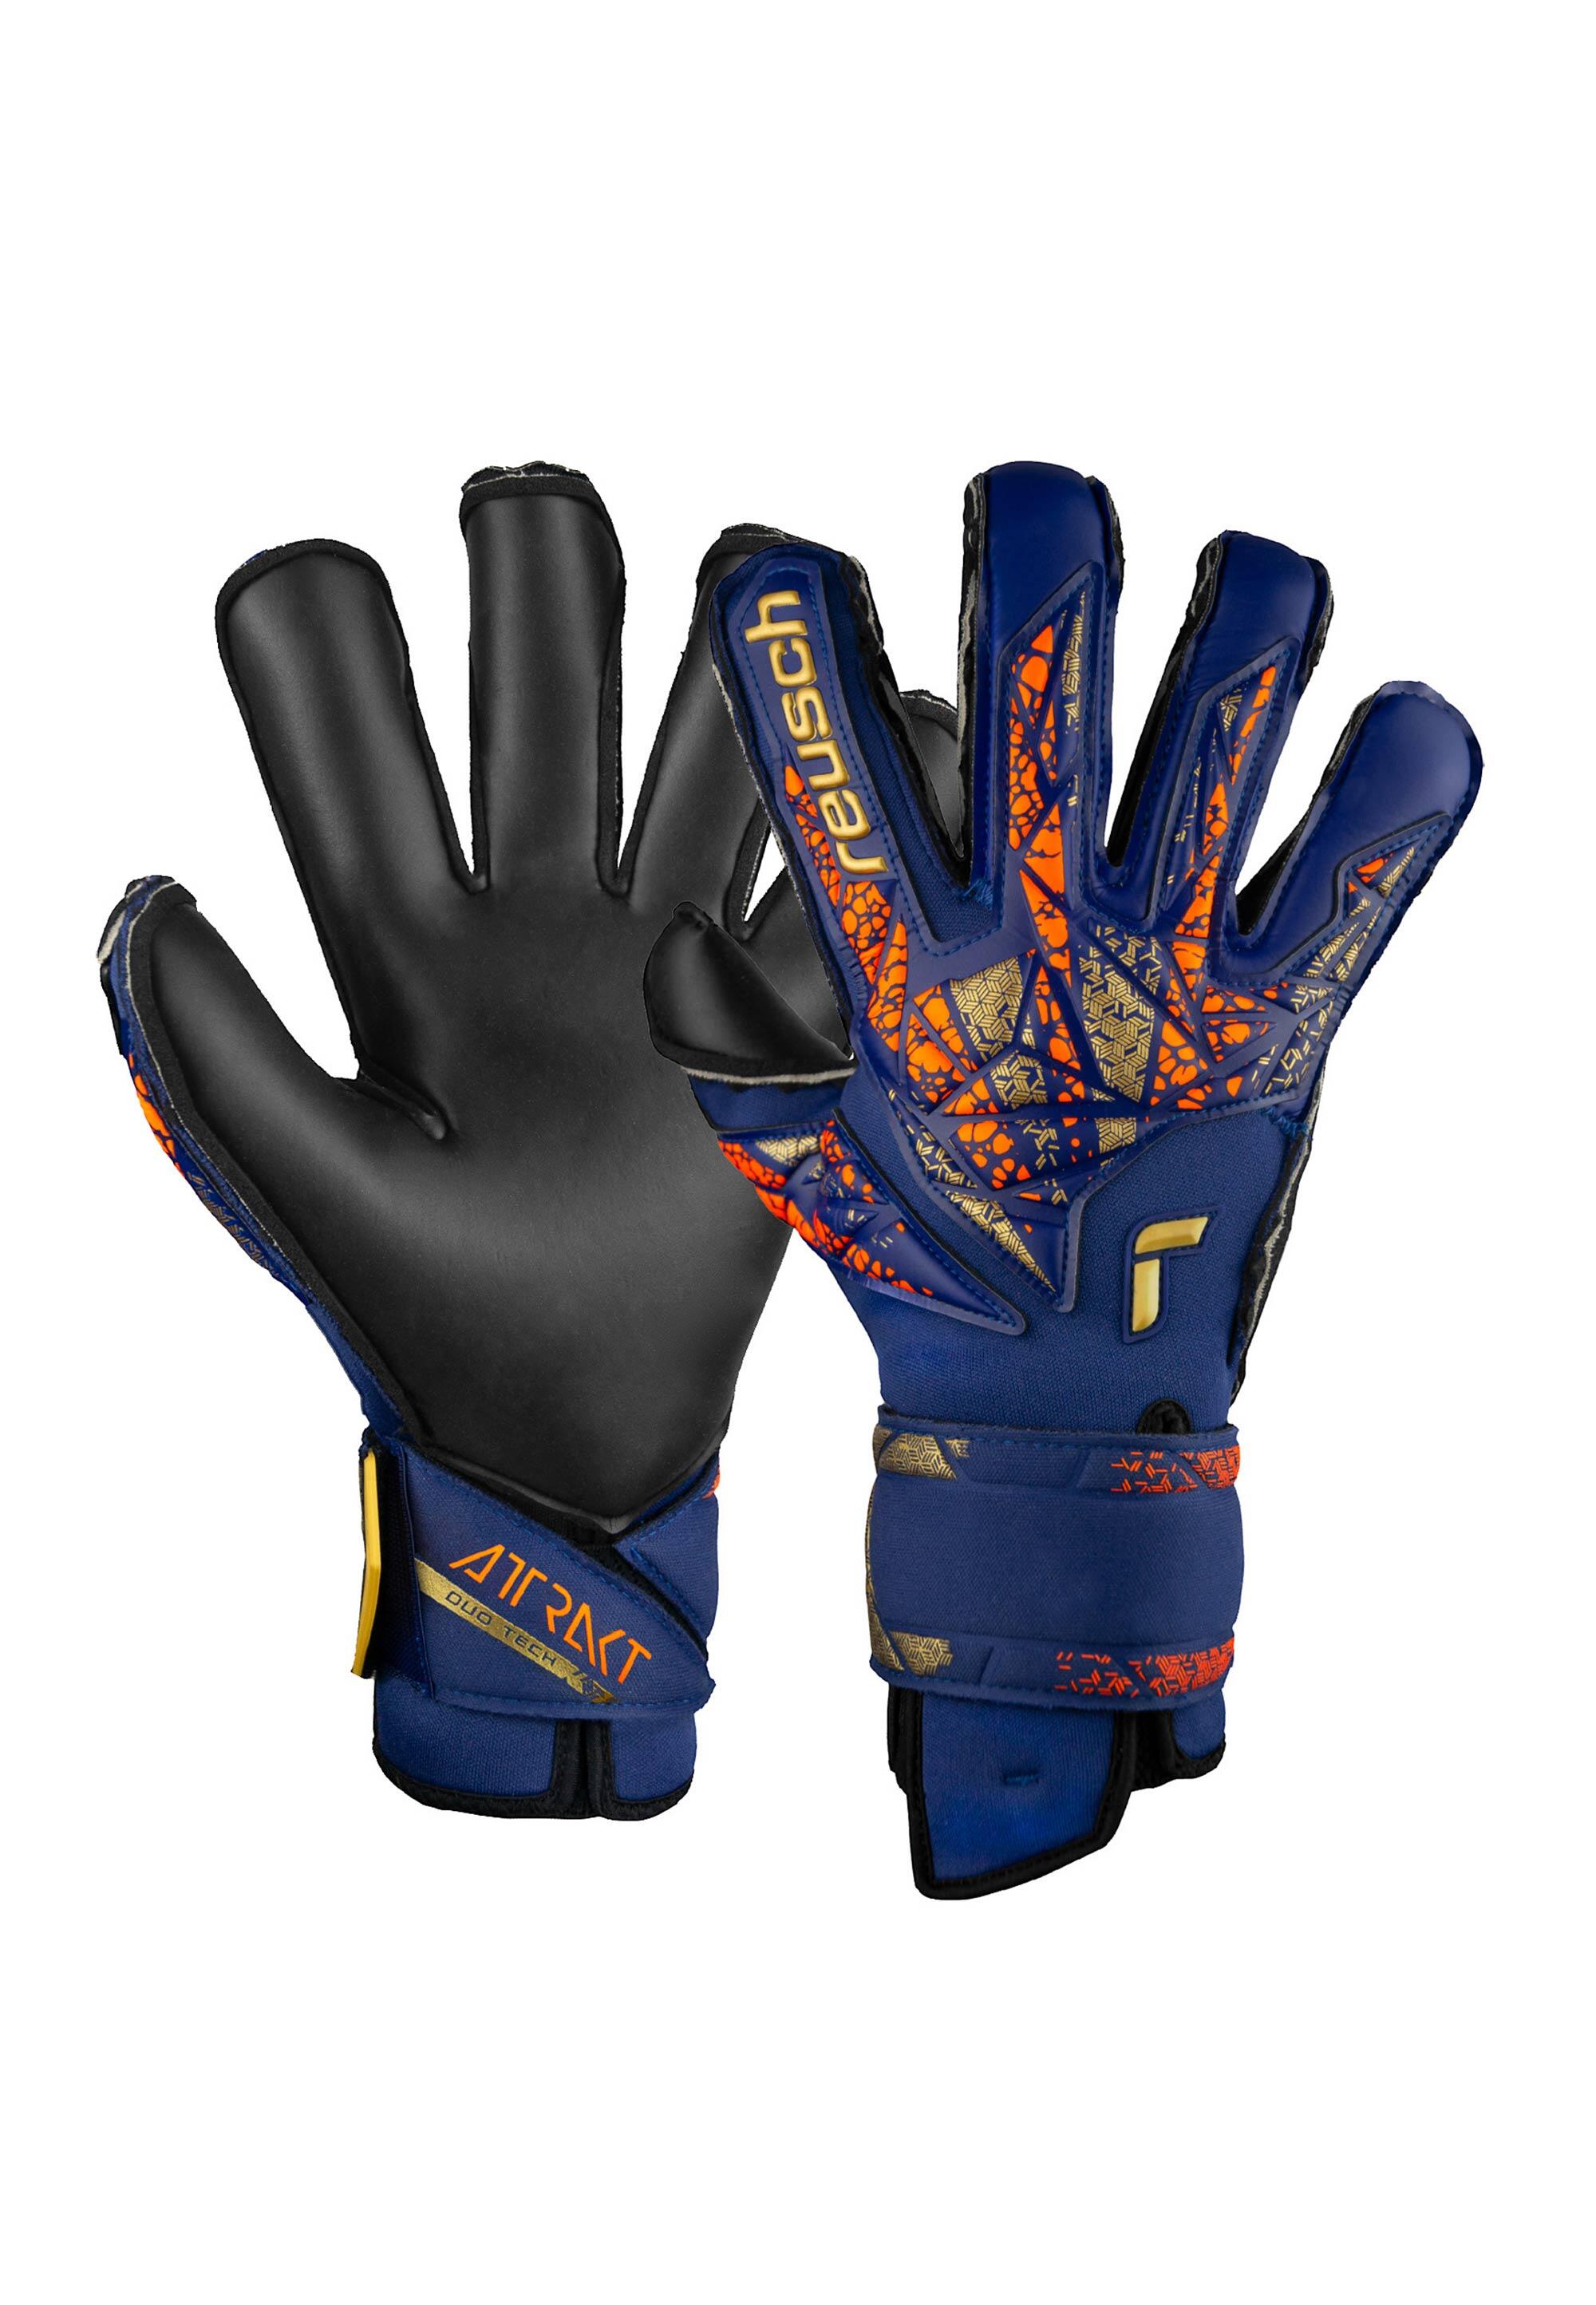 Reusch Attrakt Duo Evolution (Alisson model) Goalkeeper Gloves 1/7